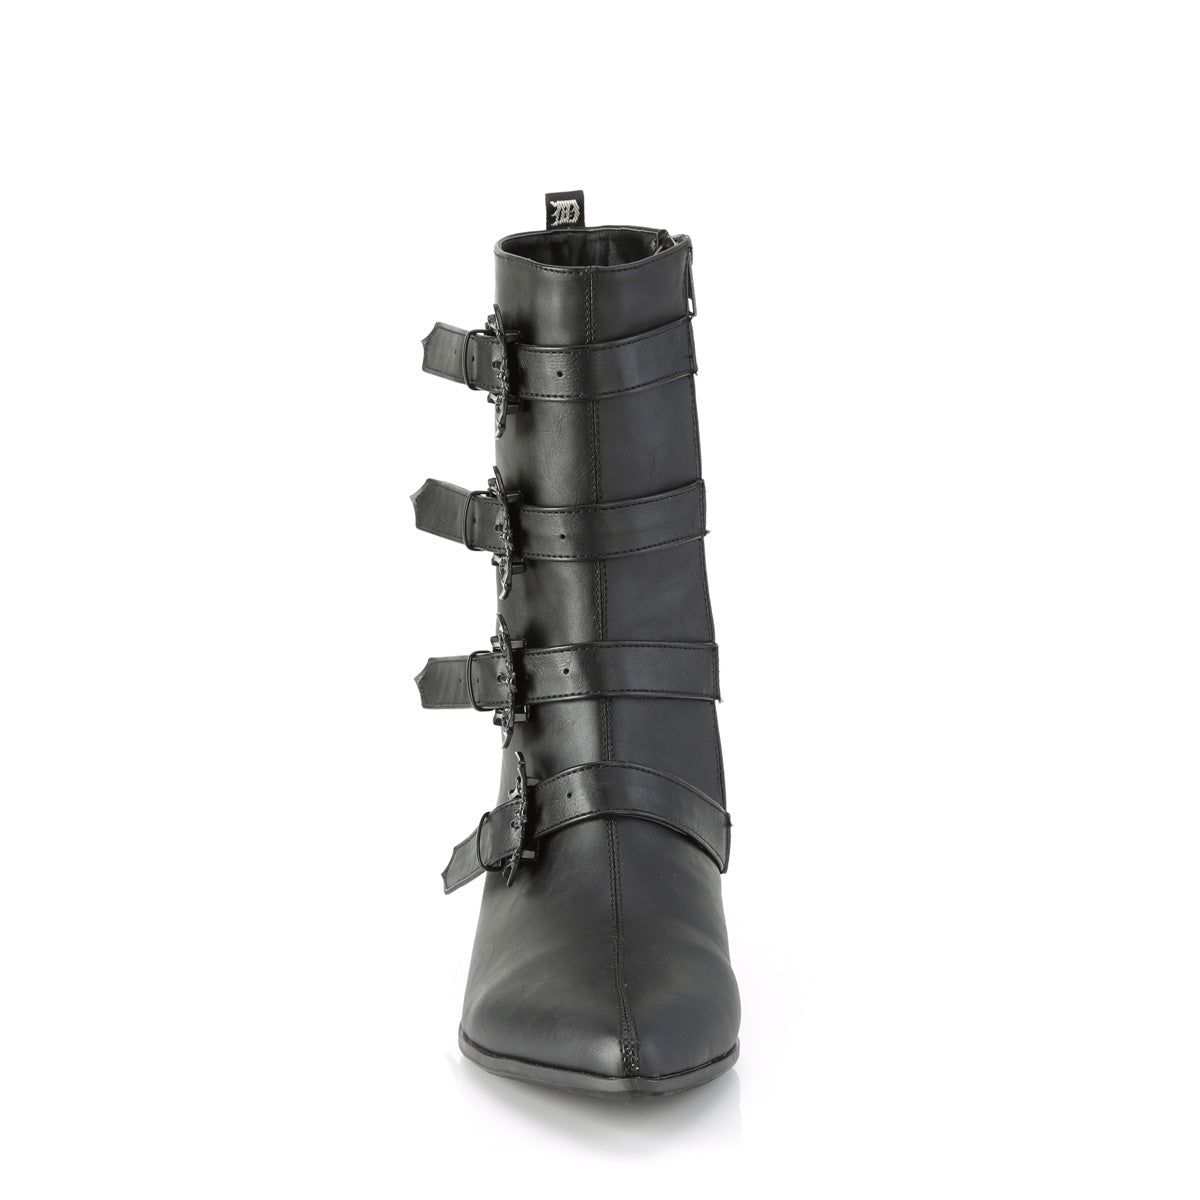 WARLOCK-110-B Black Vegan Leather Mid-Calf Boot Demonia